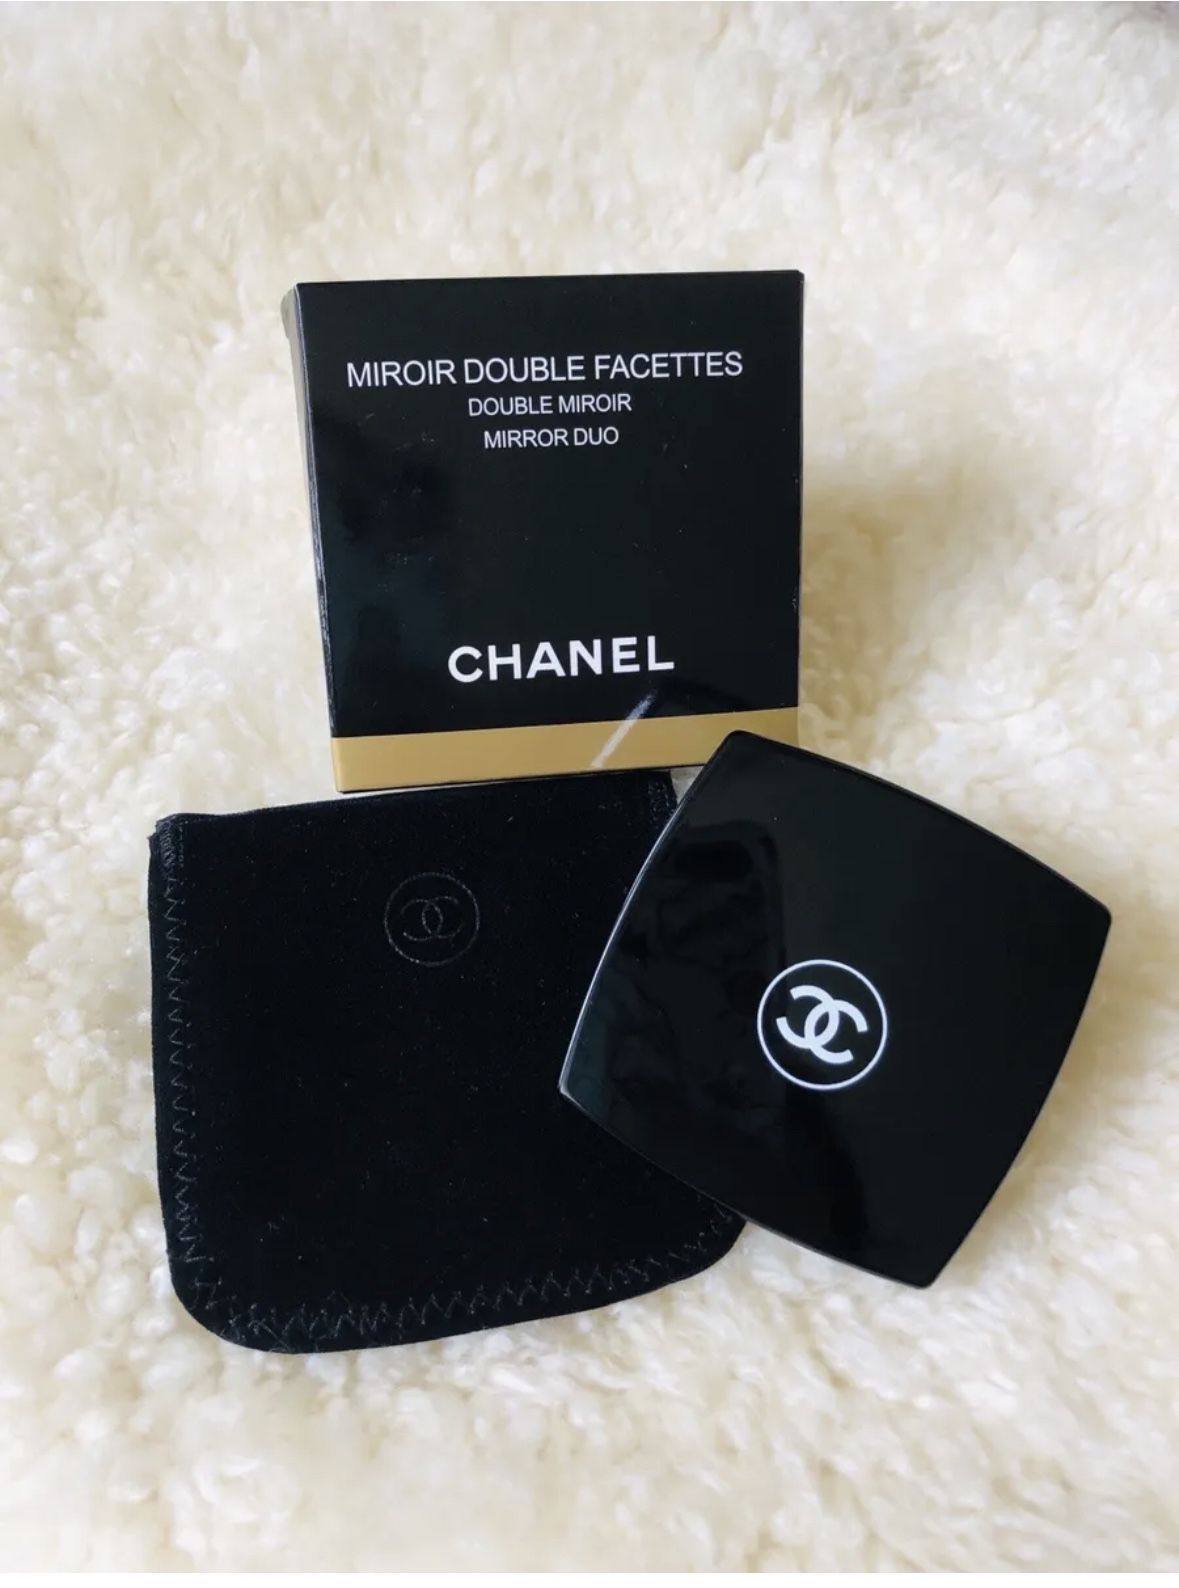 Chanel Chanel hand mirror